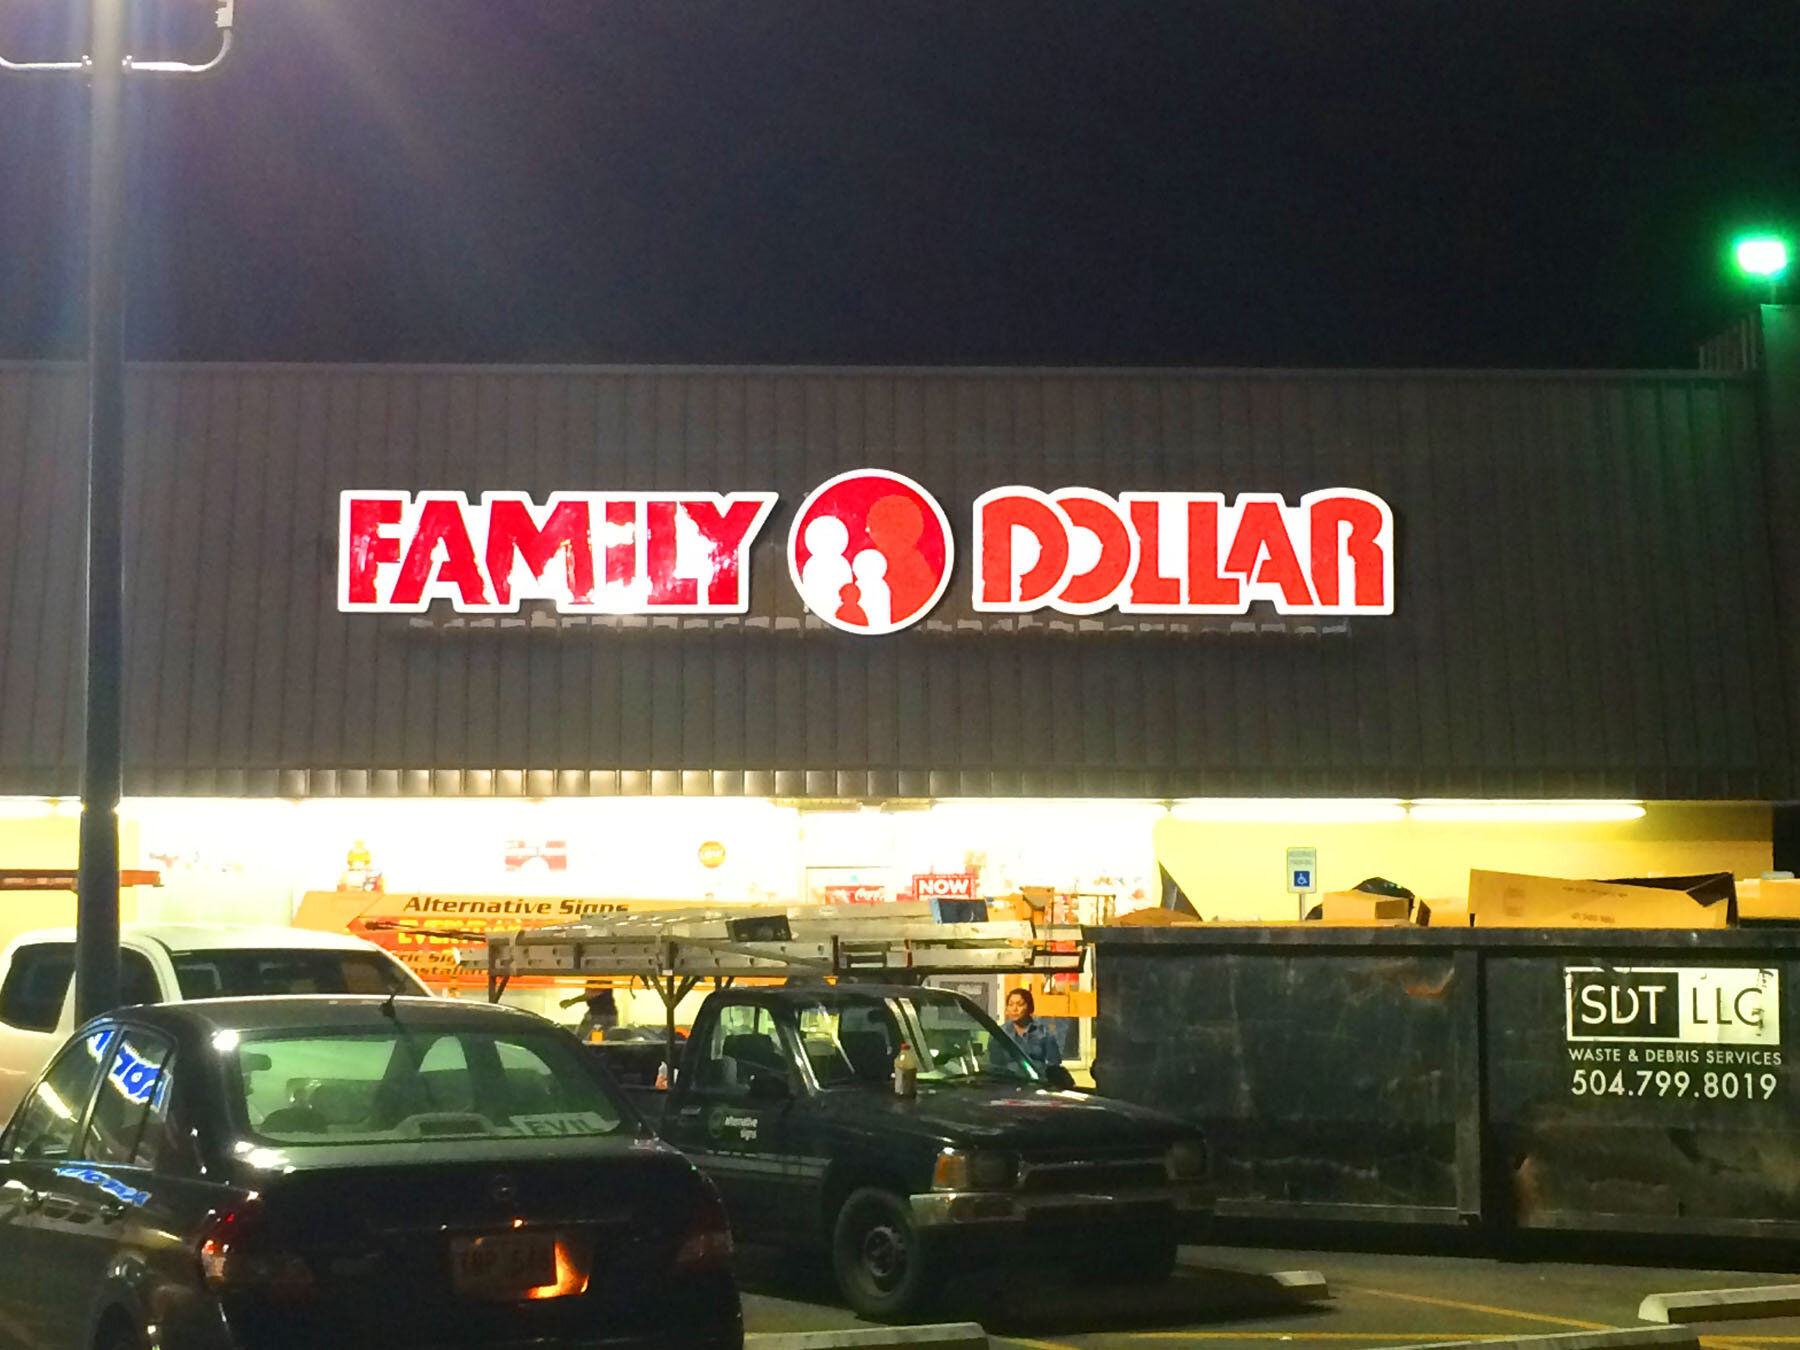 Family Dollar Backlit Sign at Night